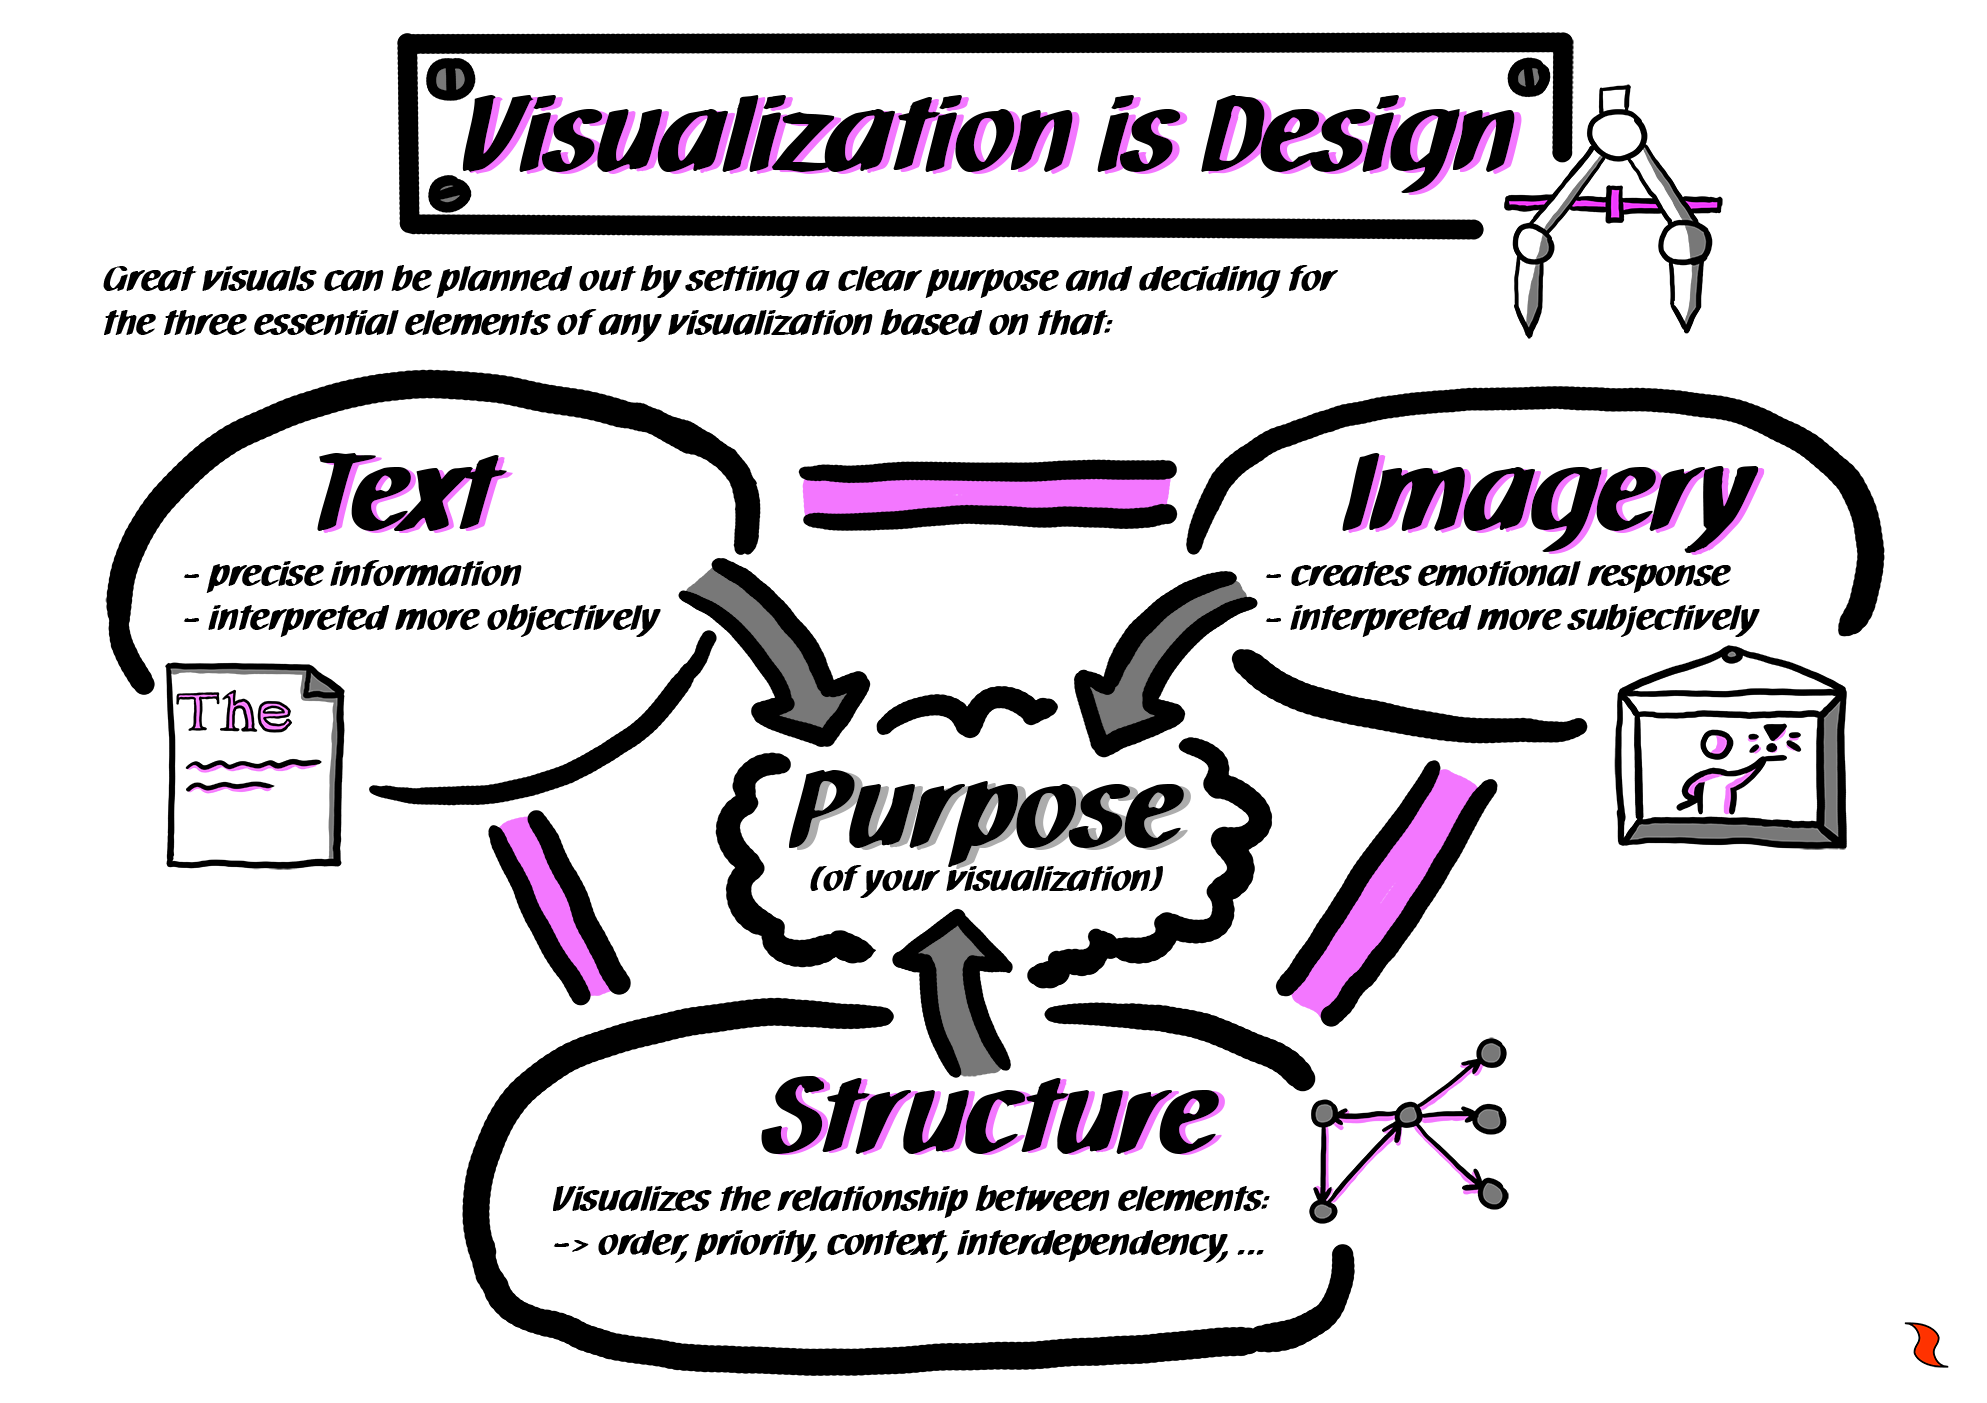 three core aspects of visualization